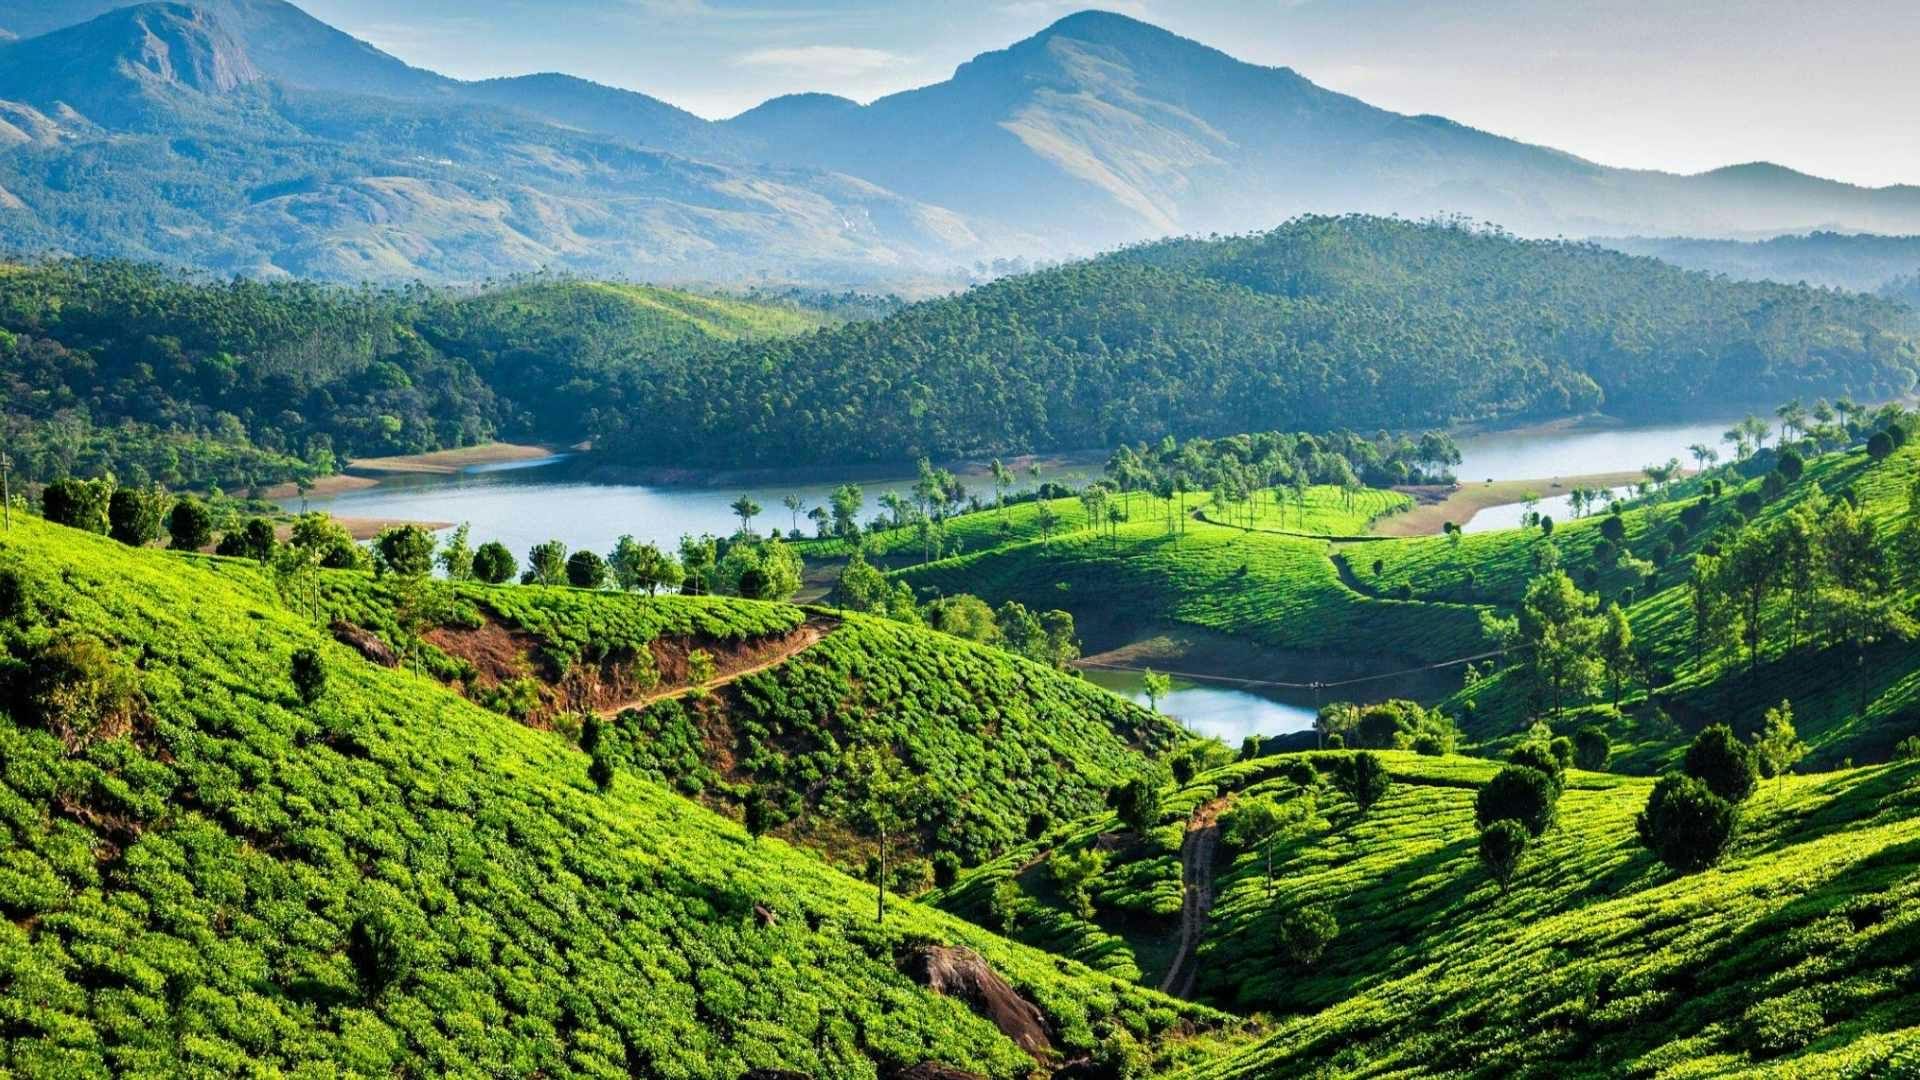 Image of Tea leaves estate and hill views, munnar, kerala